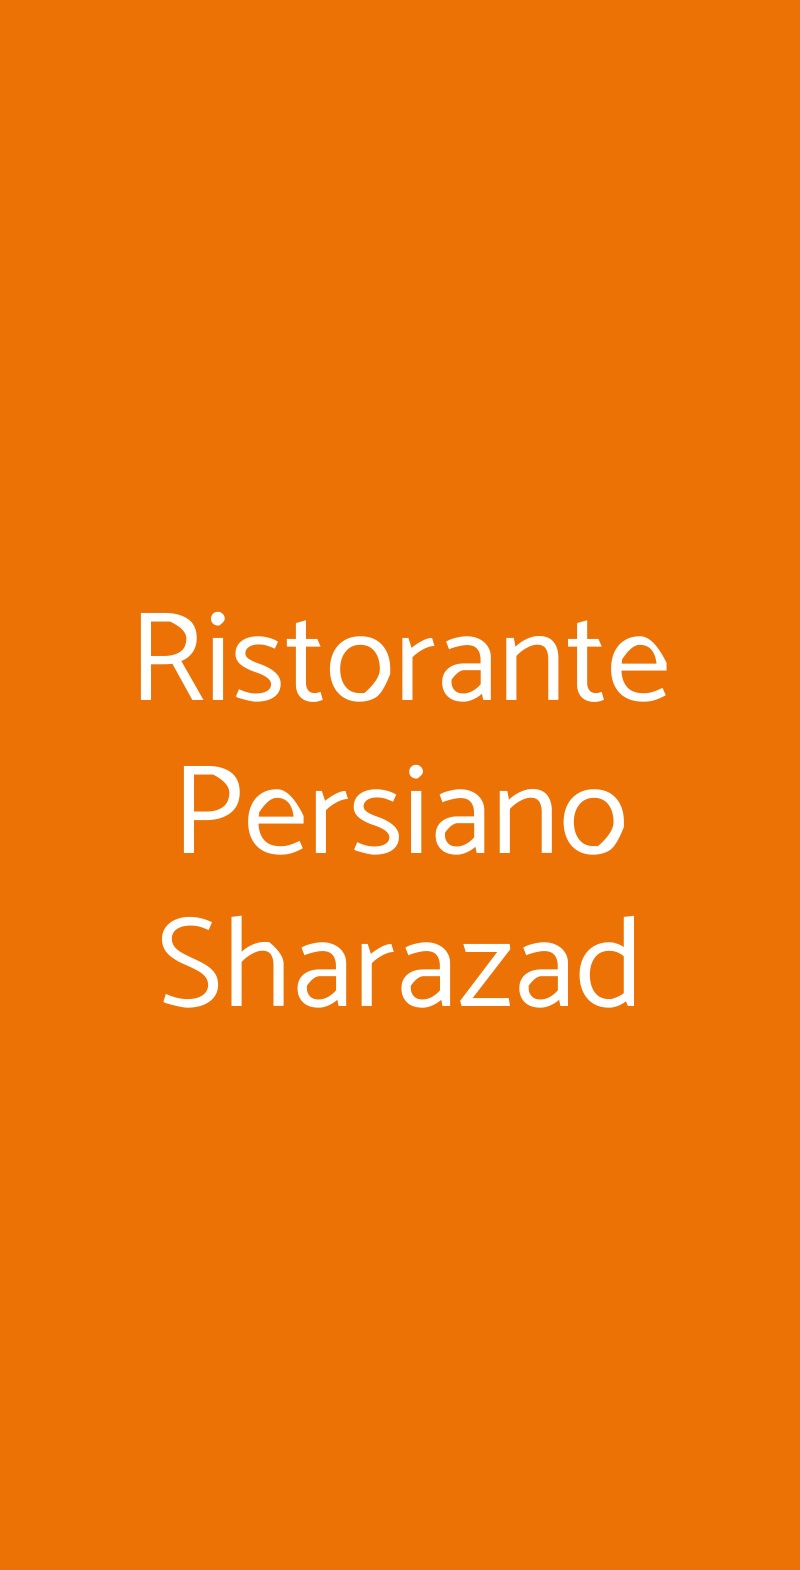 Ristorante Persiano Sharazad Torino menù 1 pagina